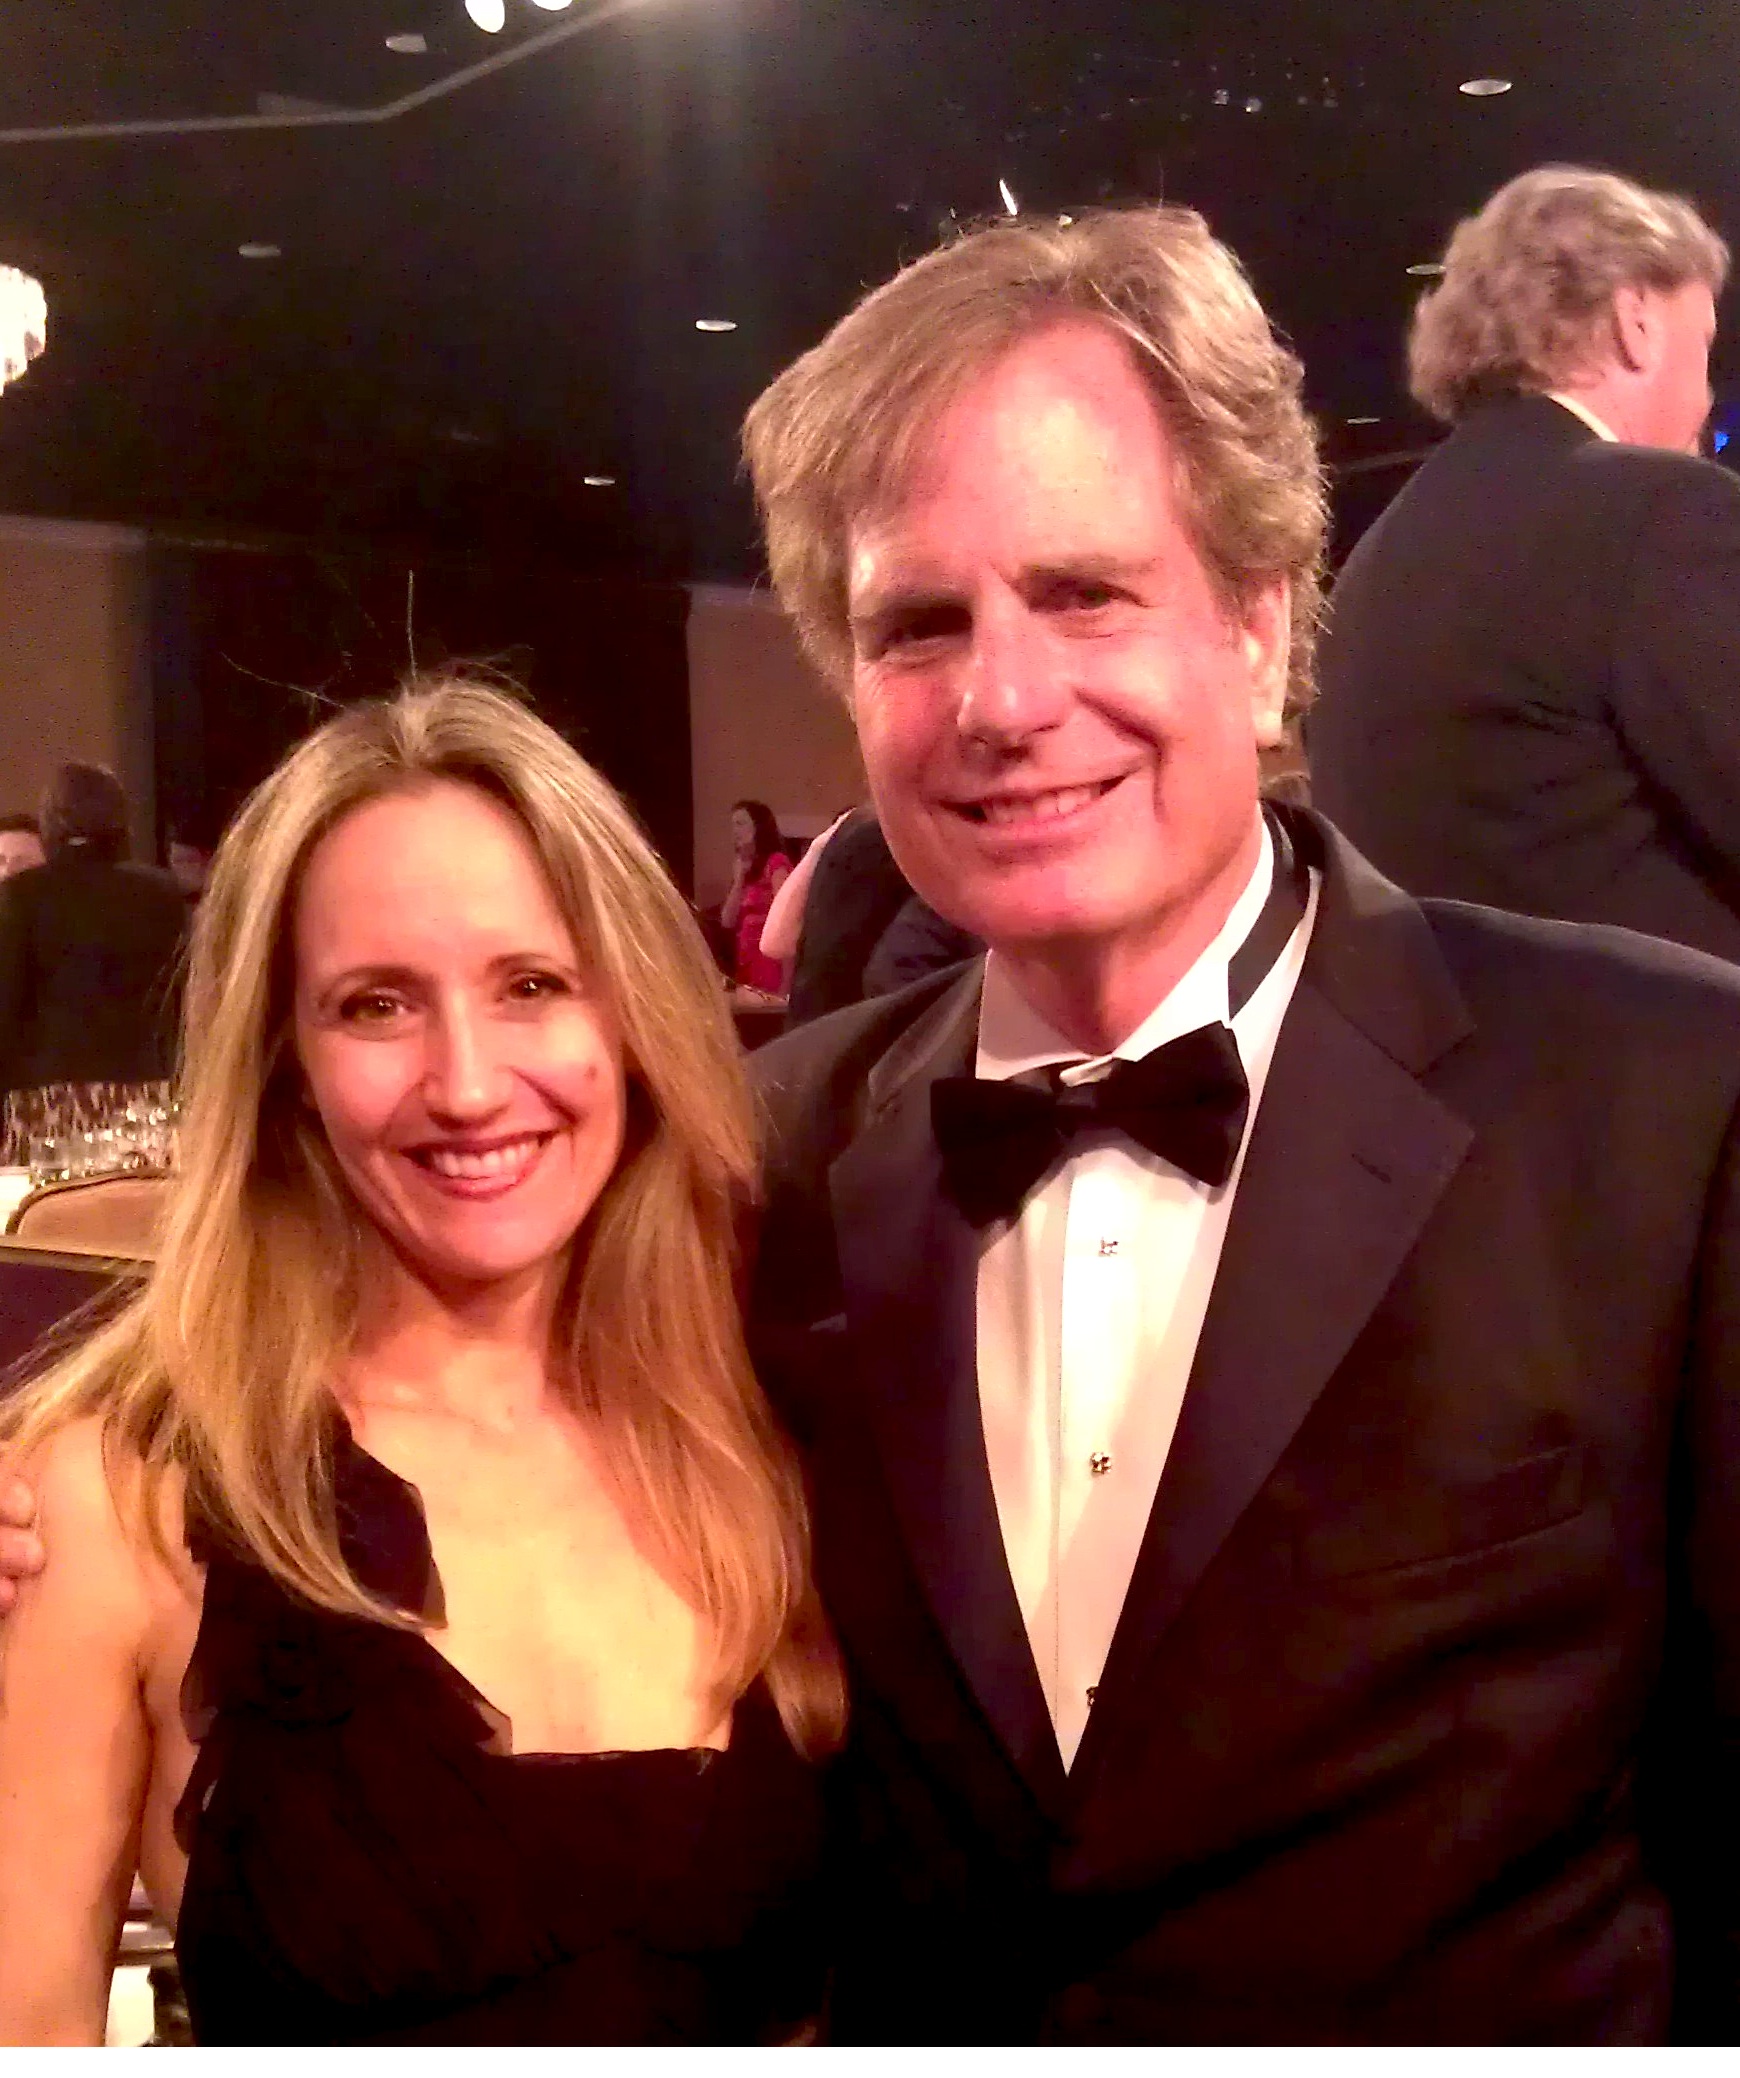 with David Kontesz at the 2012 ASCAP dinner